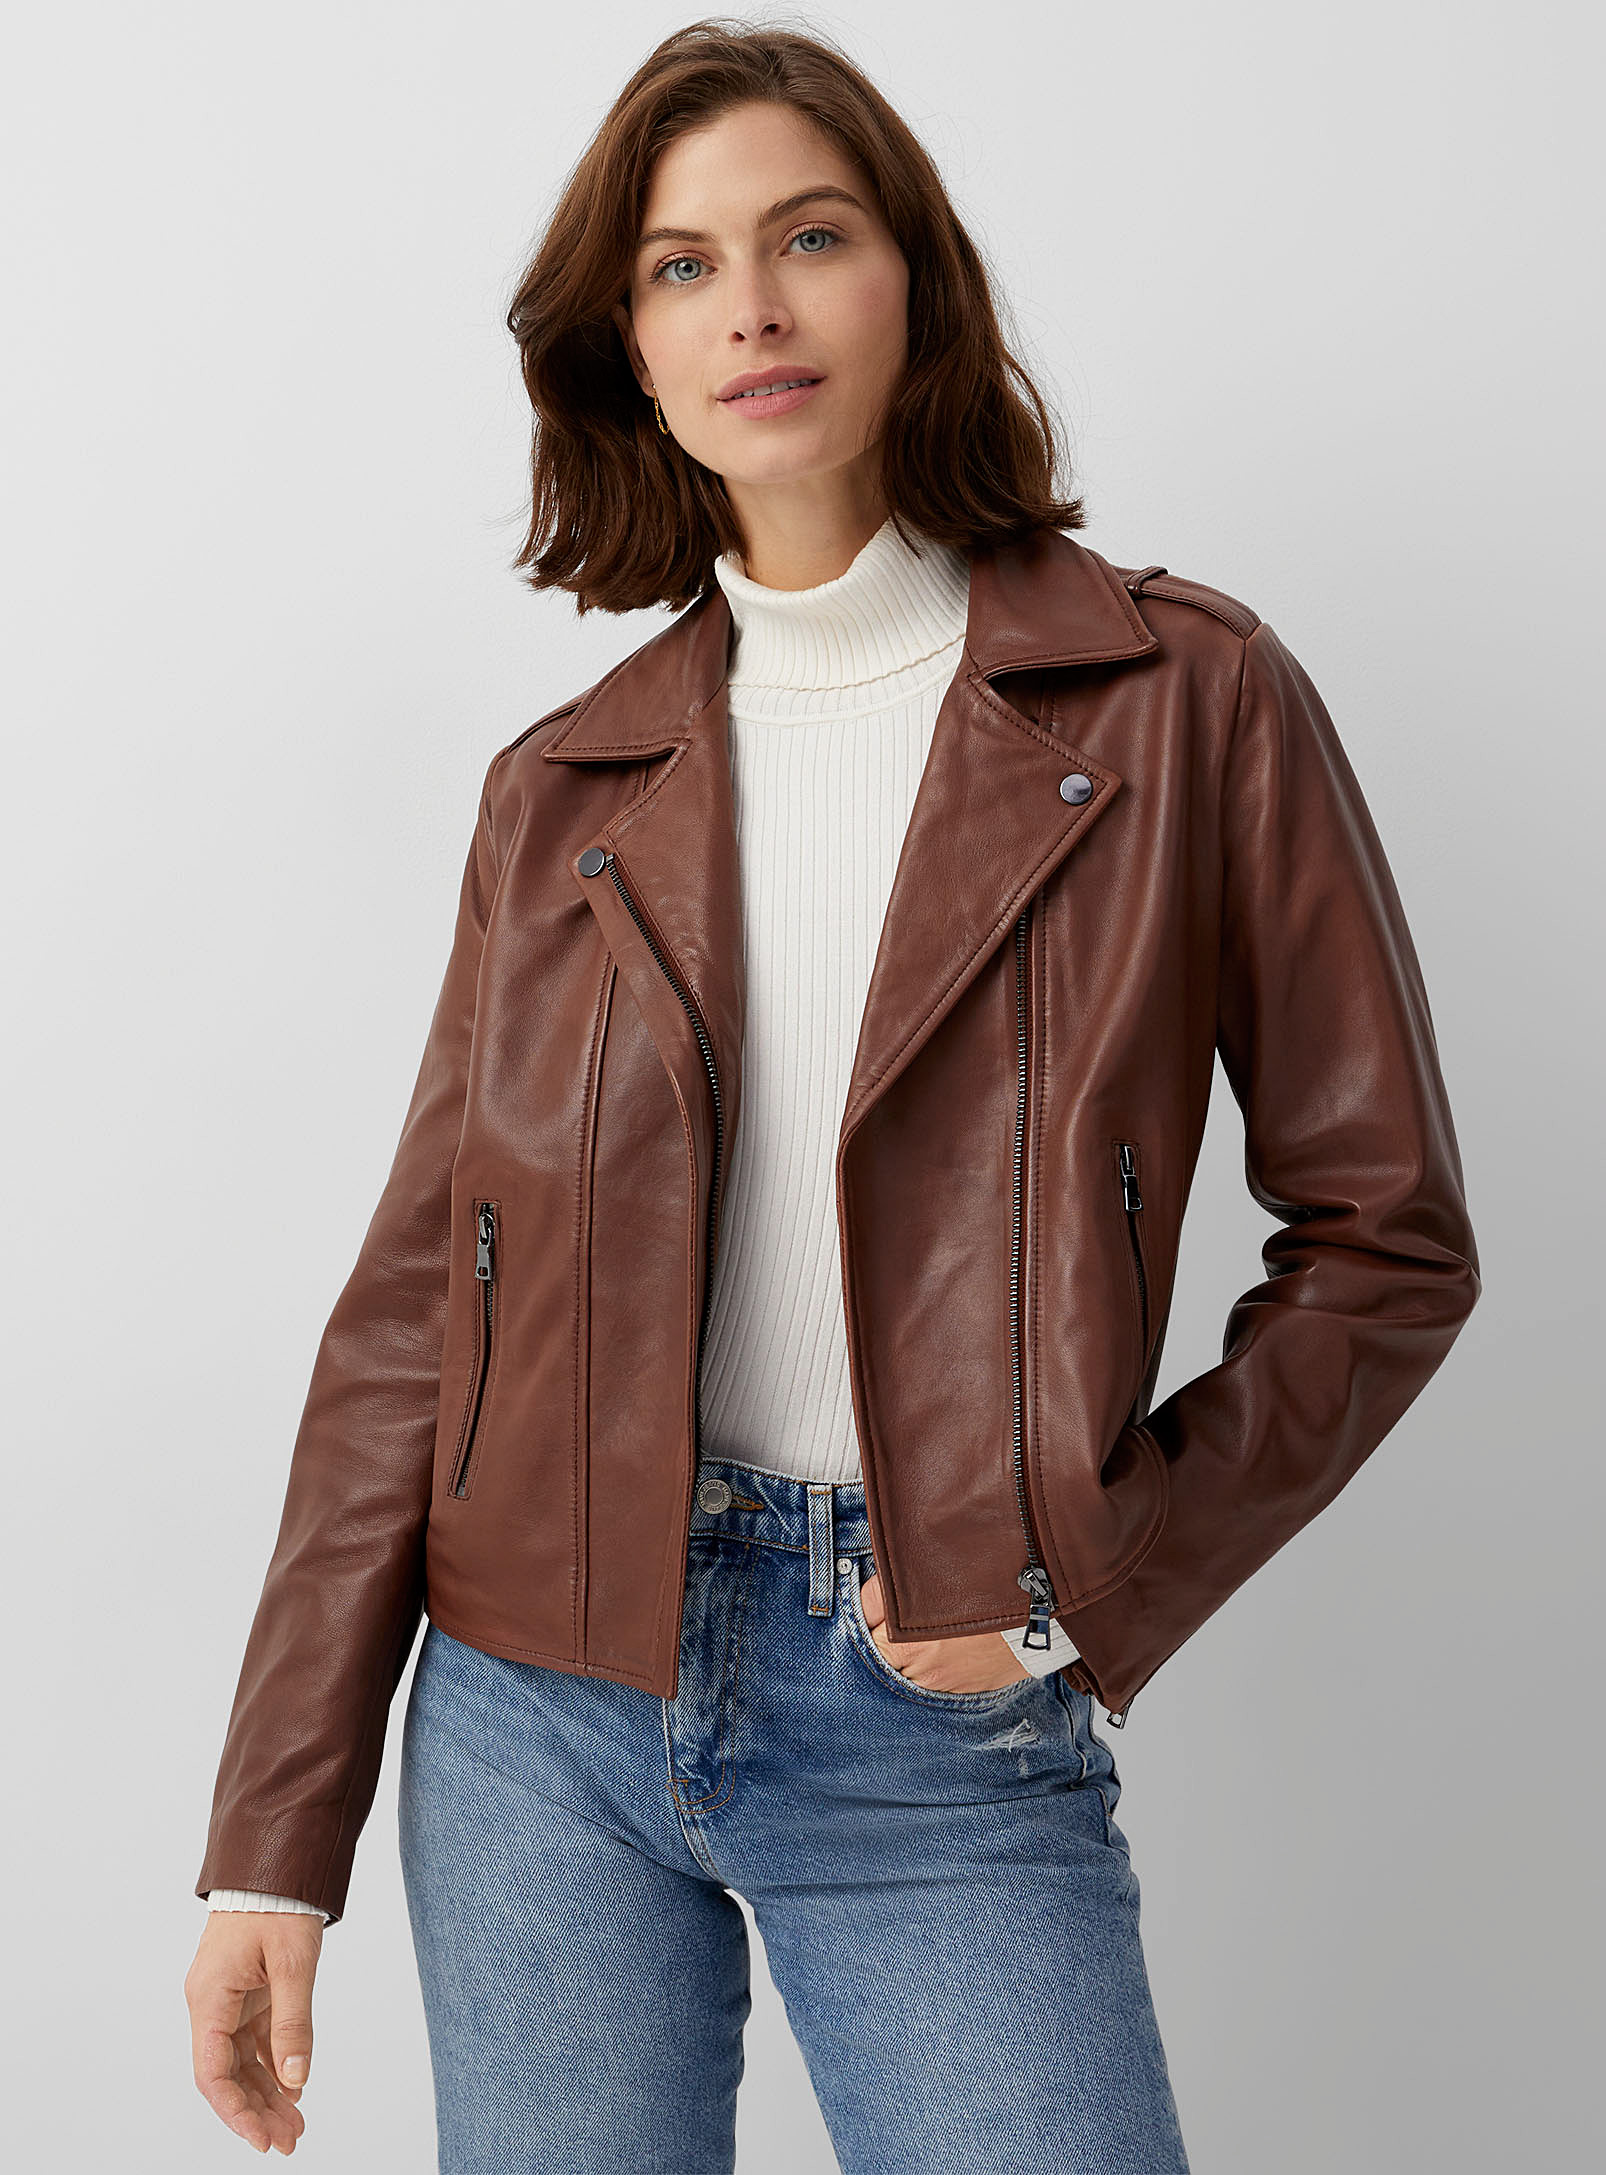 Contemporaine - Women's Hazelnut leather jacket